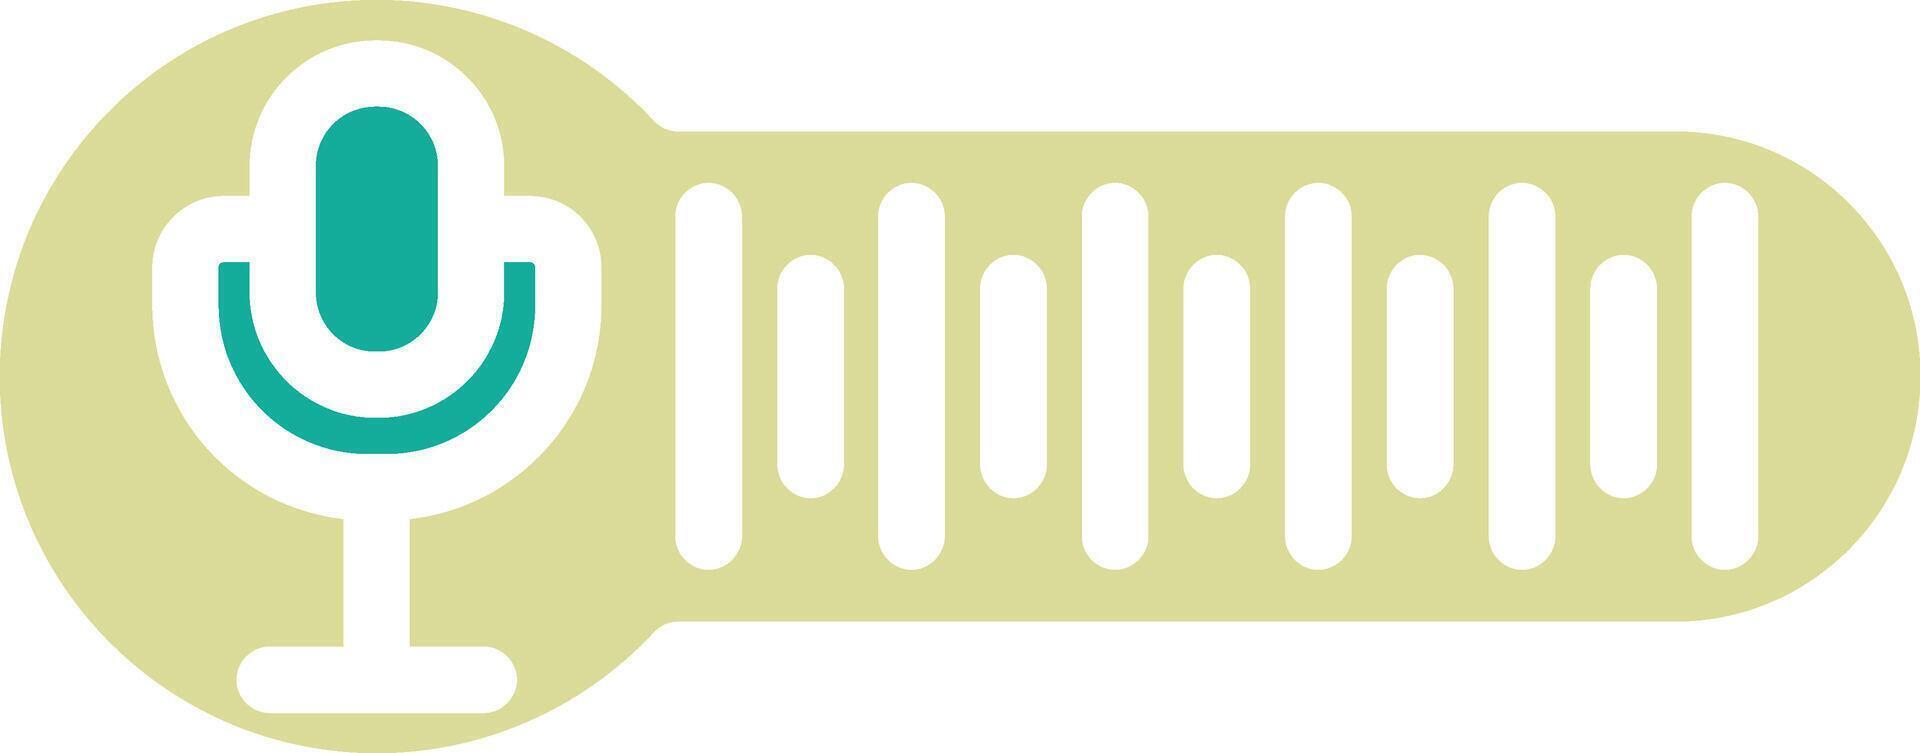 Voice Message Vector Icon